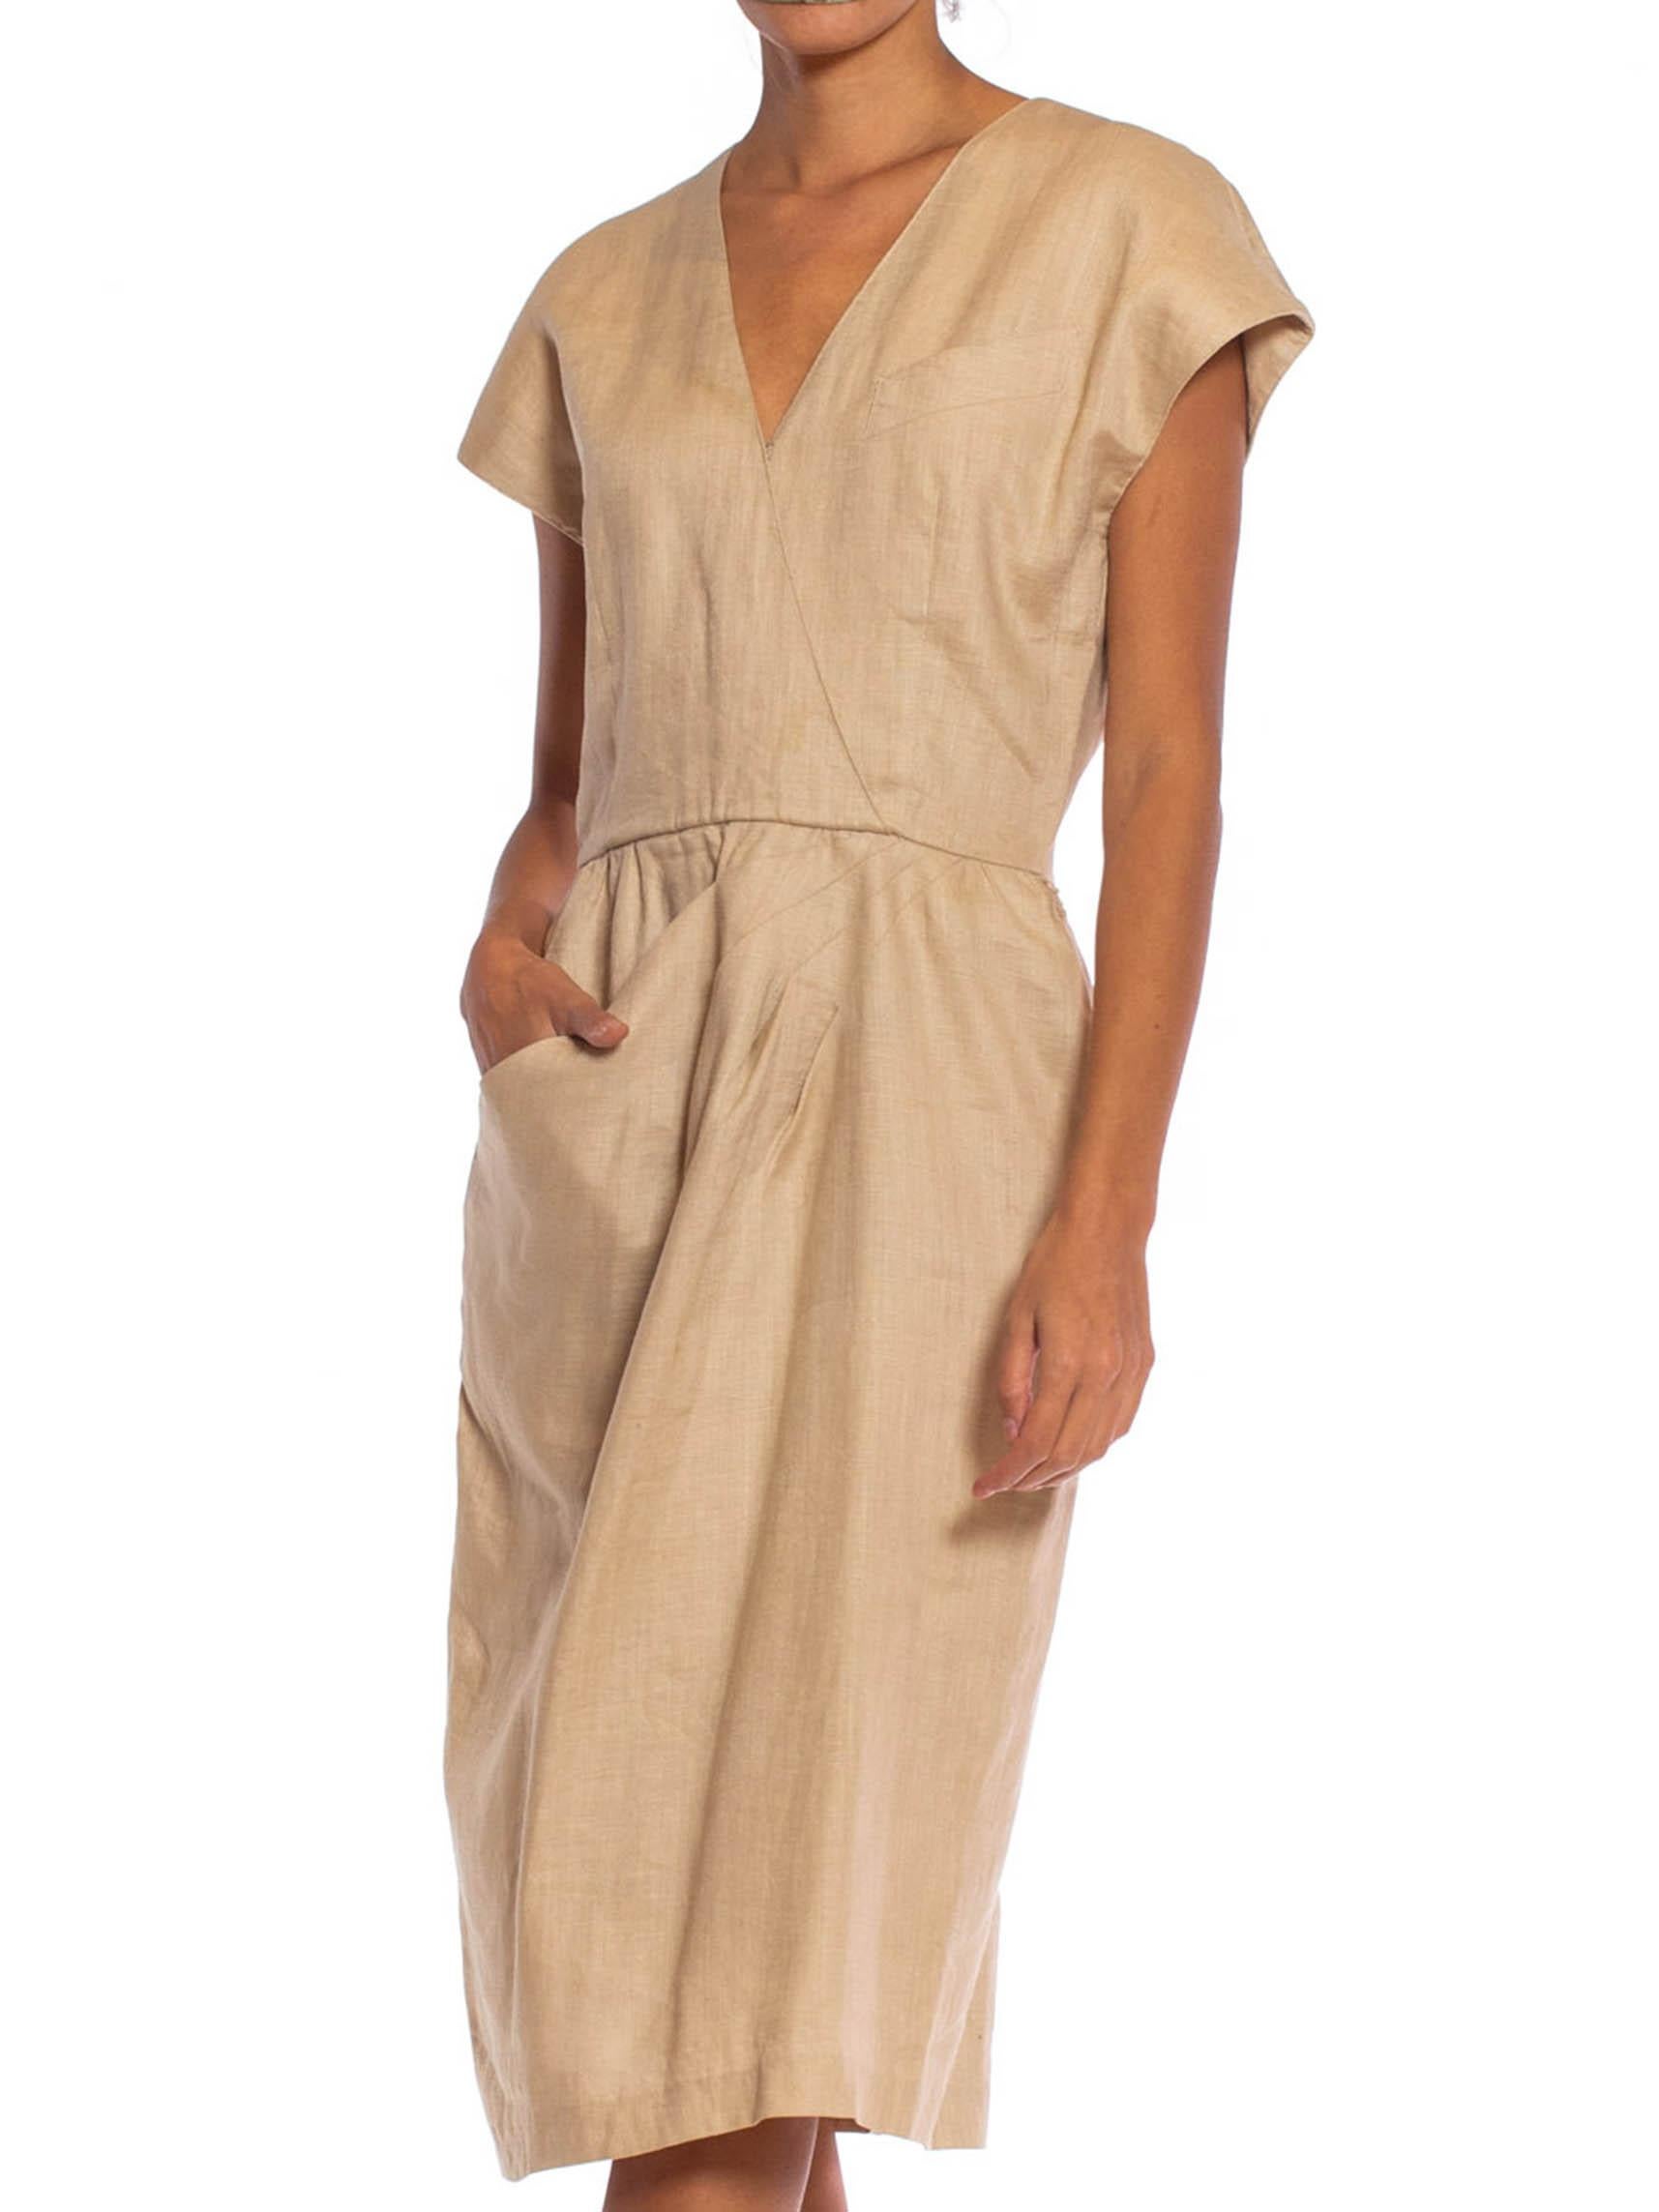 1980S Beige Linen Blend Dress Lined In Rayon For Sale 1